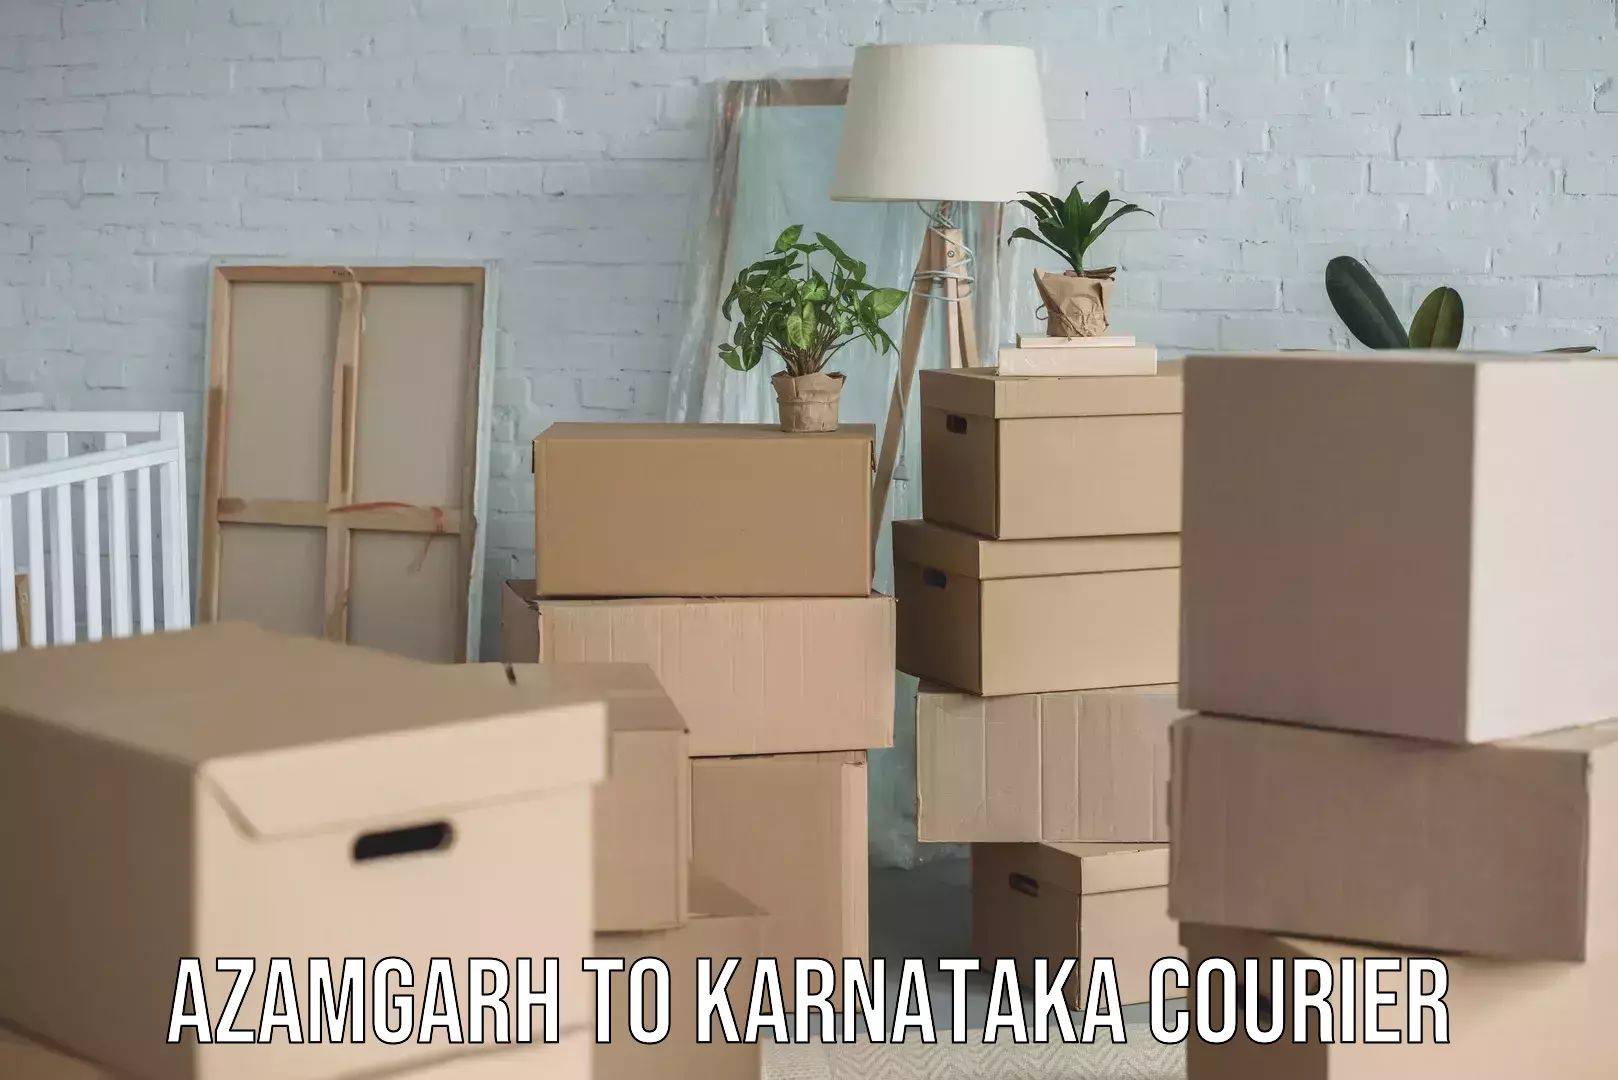 User-friendly delivery service Azamgarh to Karnataka